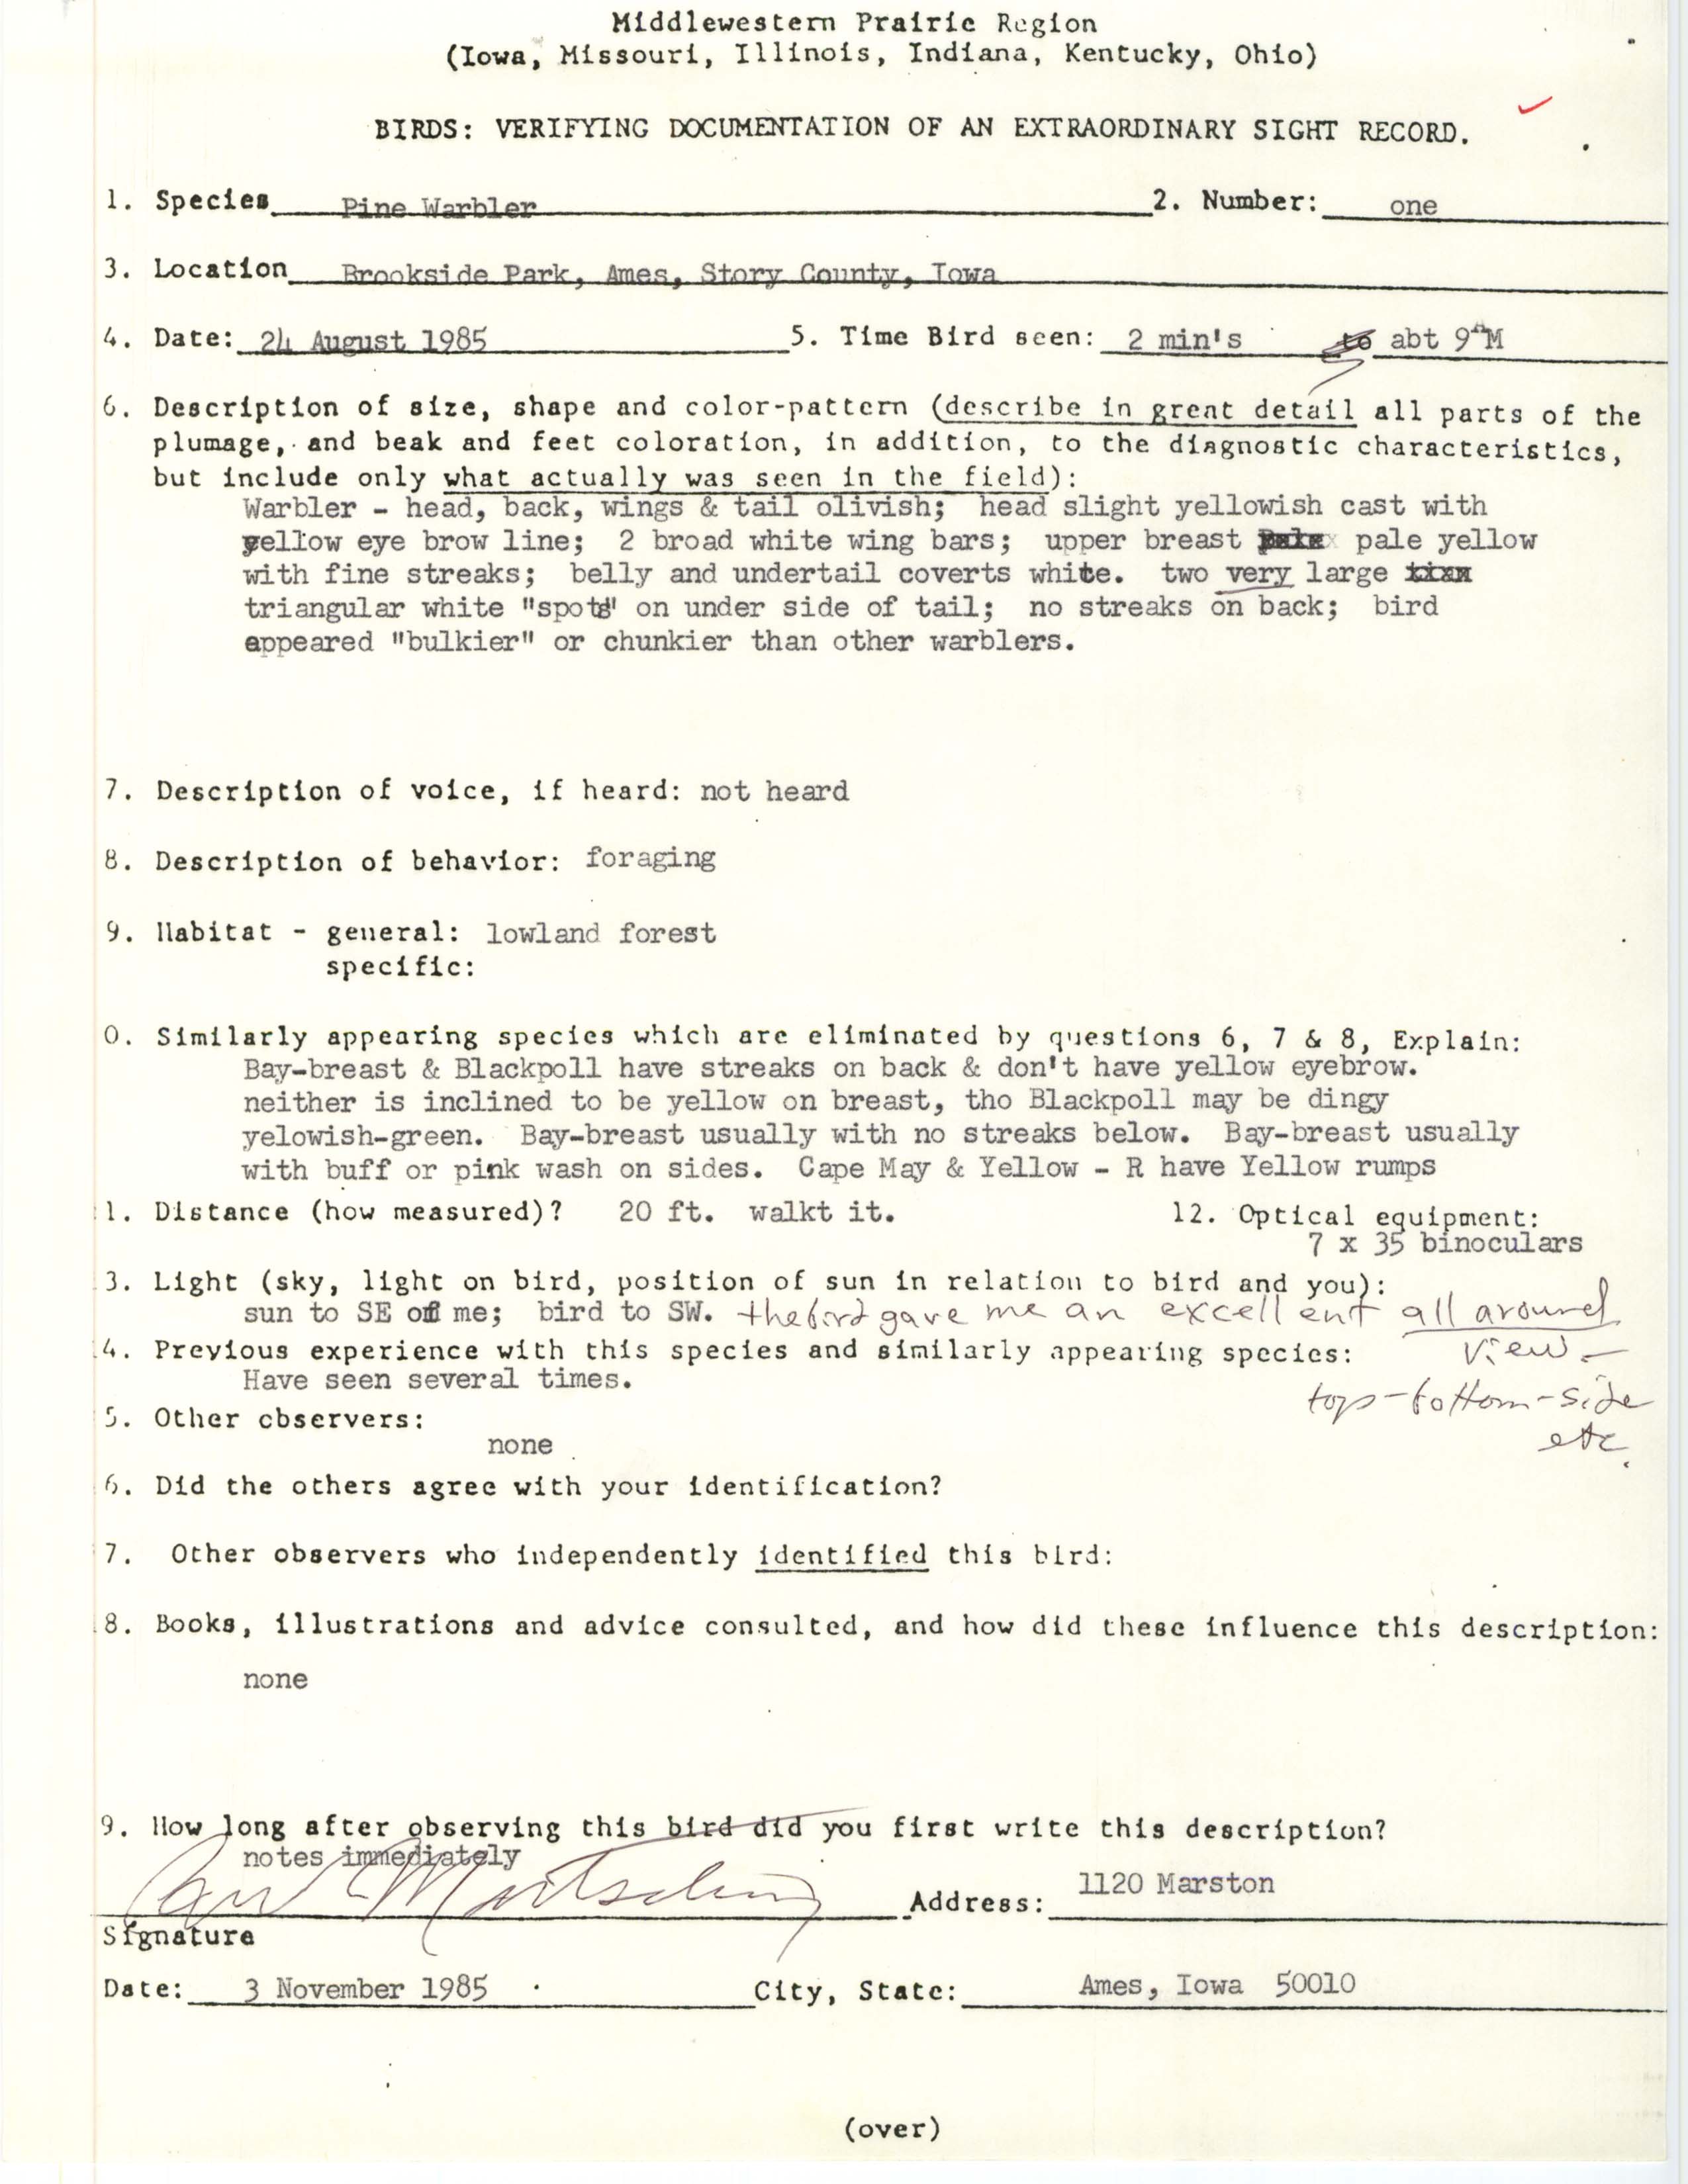 Rare bird documentation form for Pine Warbler at Brookside Park in Ames, 1985